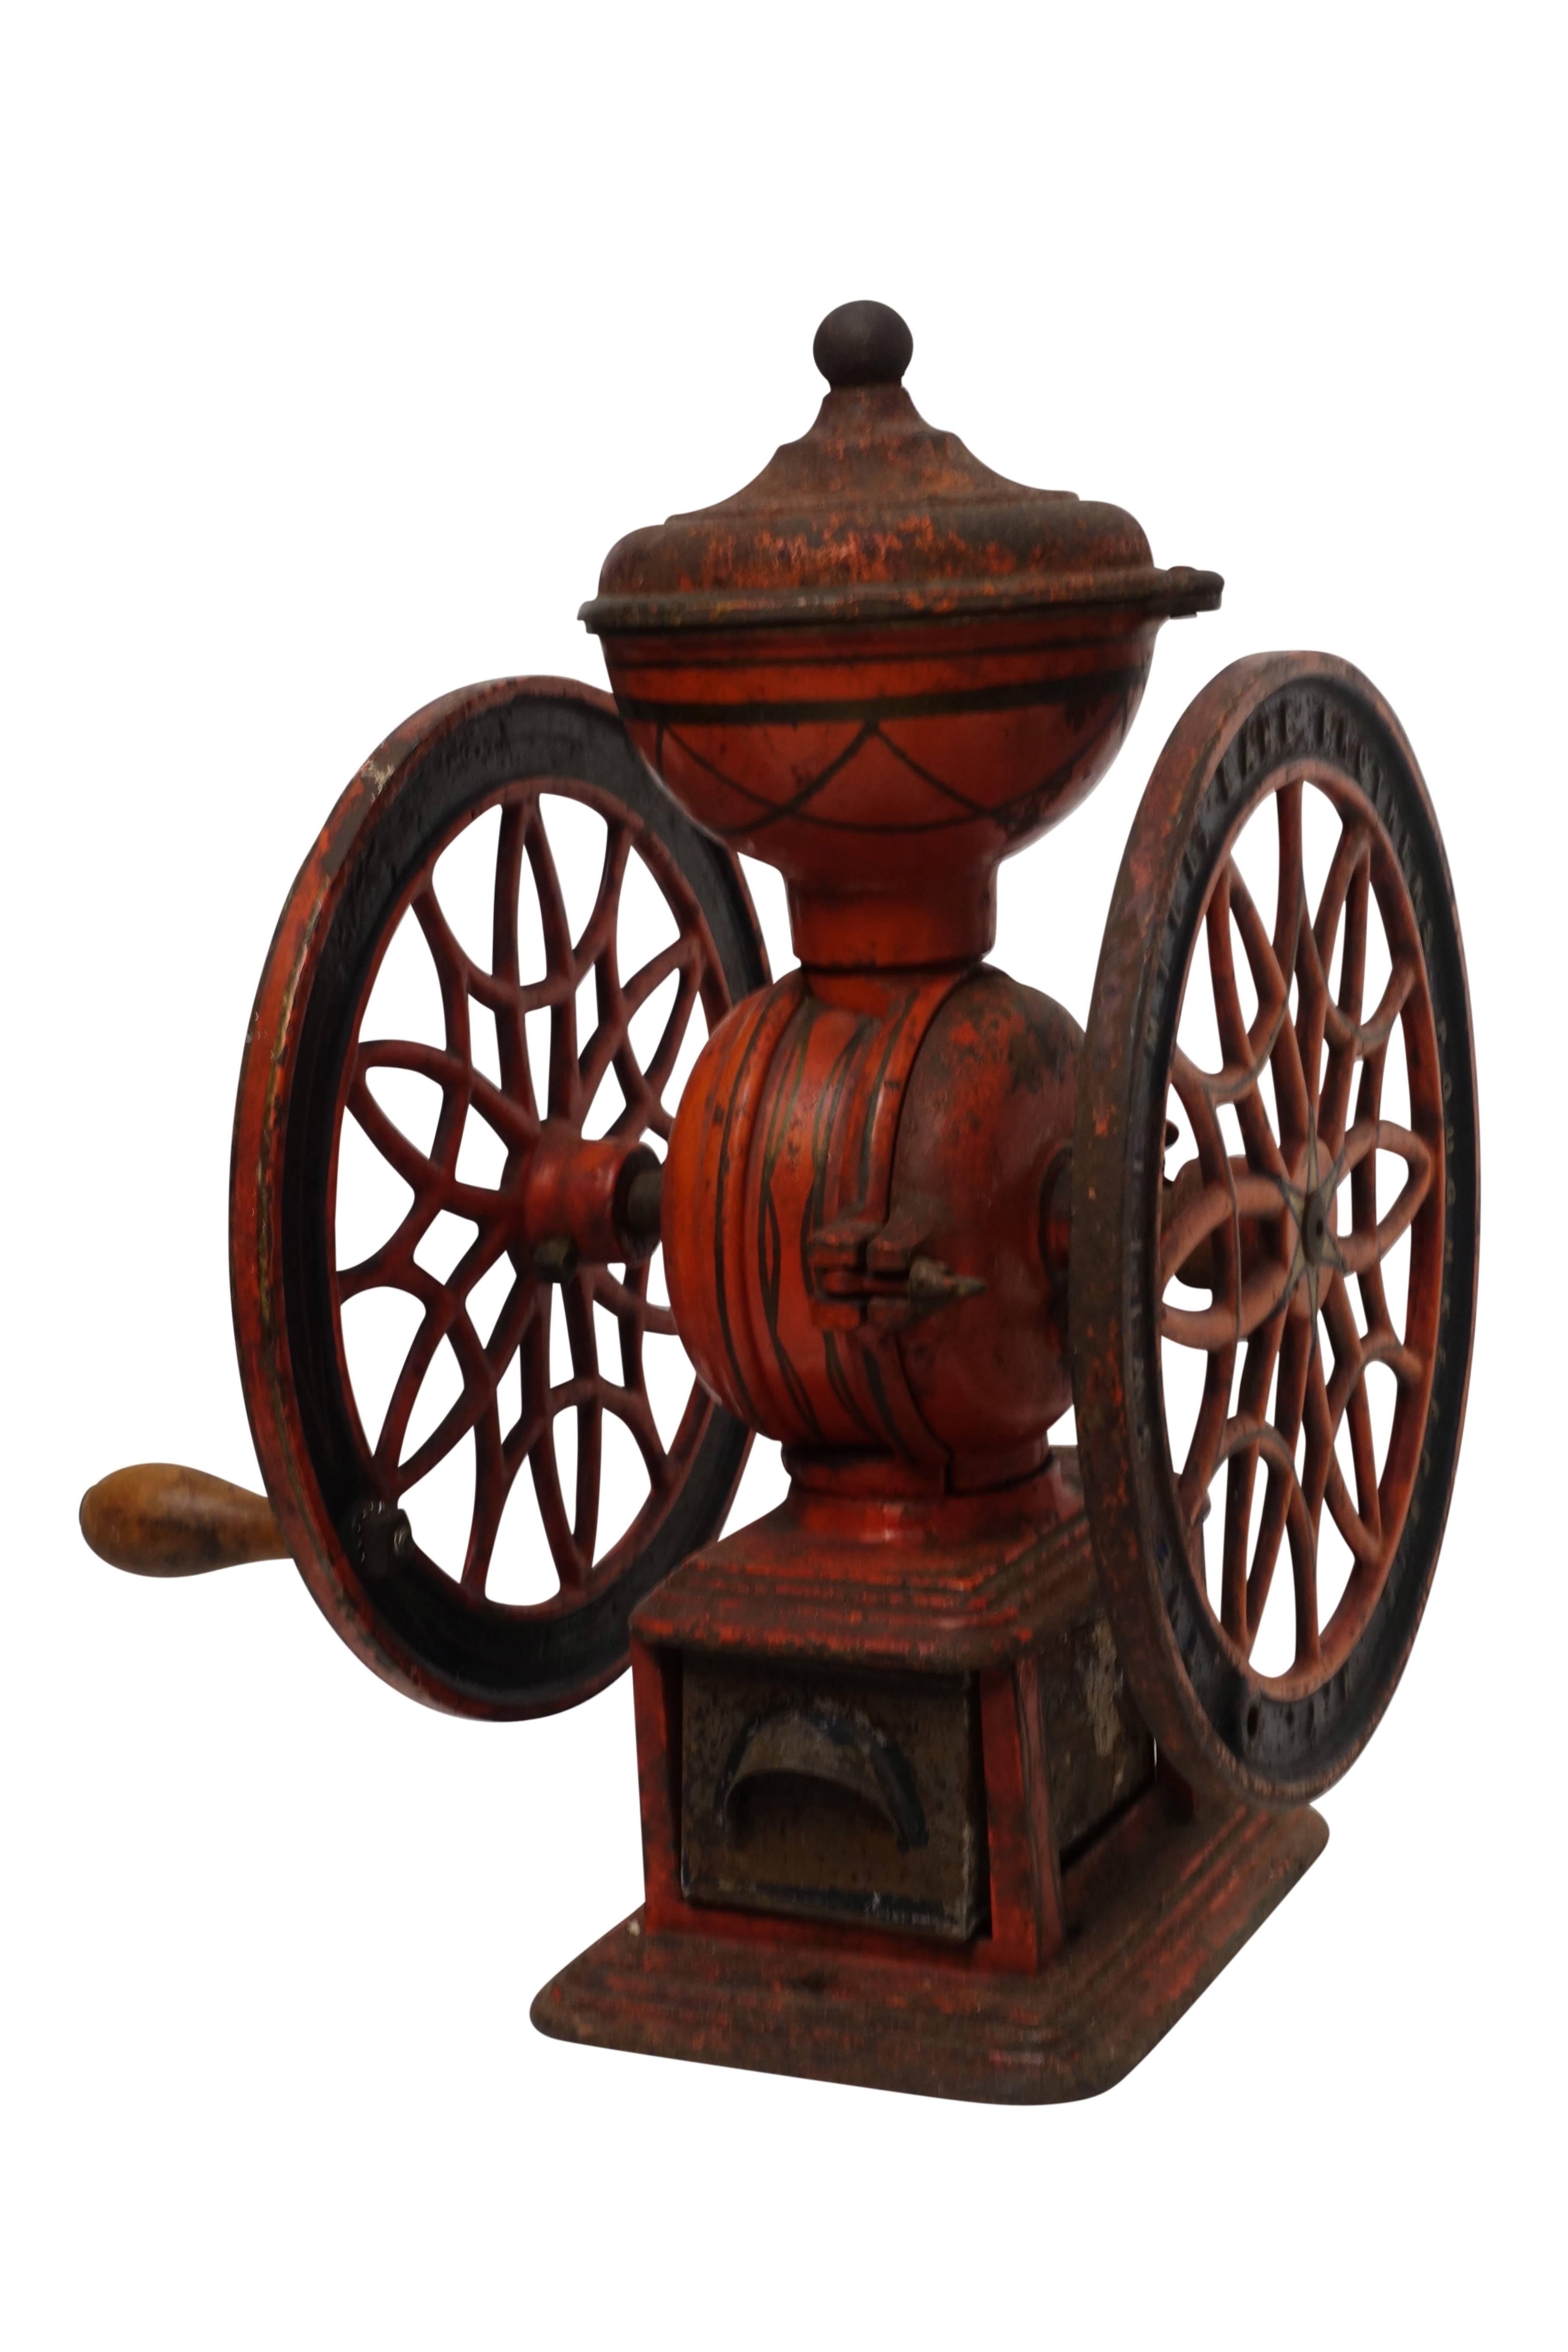 19th century coffee grinder